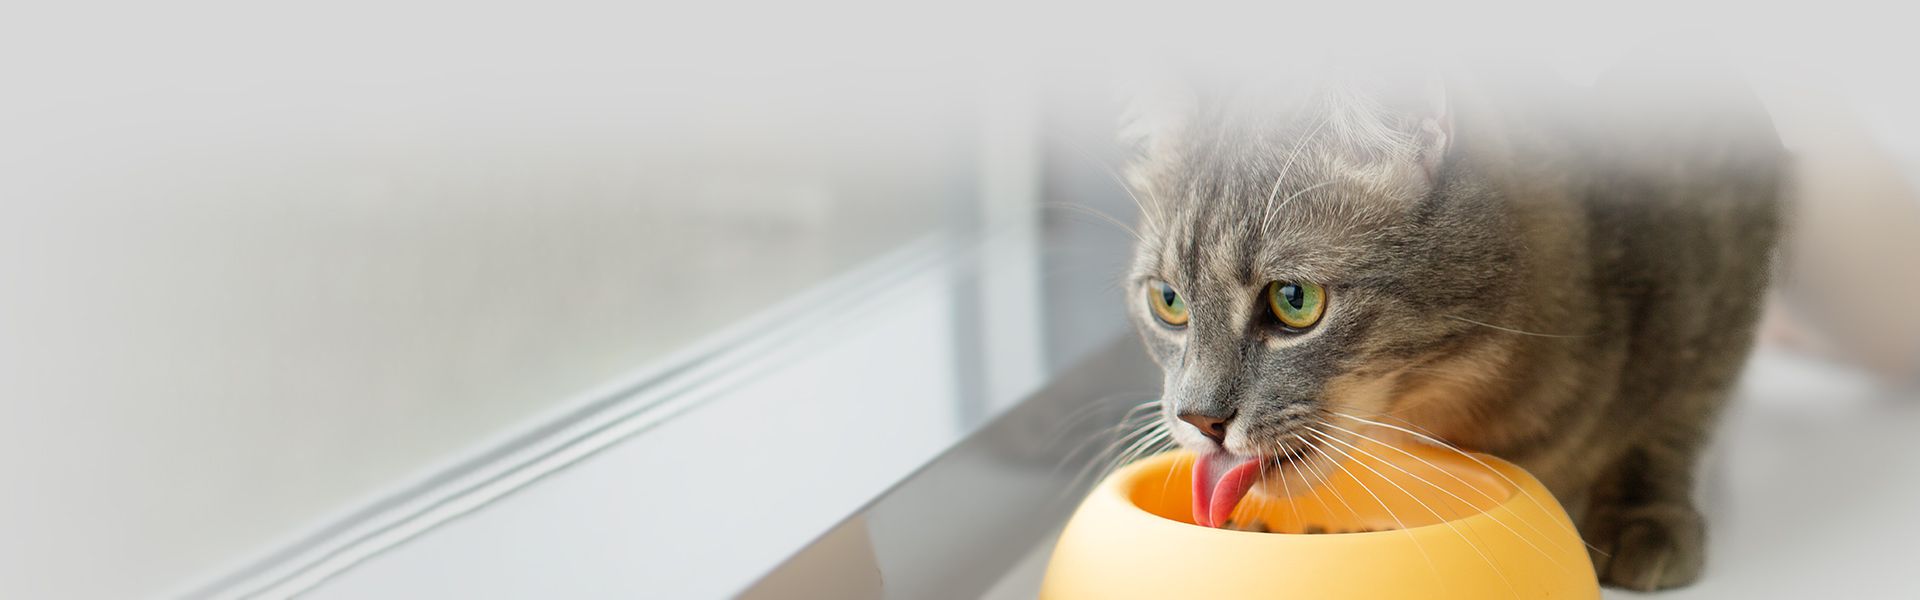 beautiful cat eating